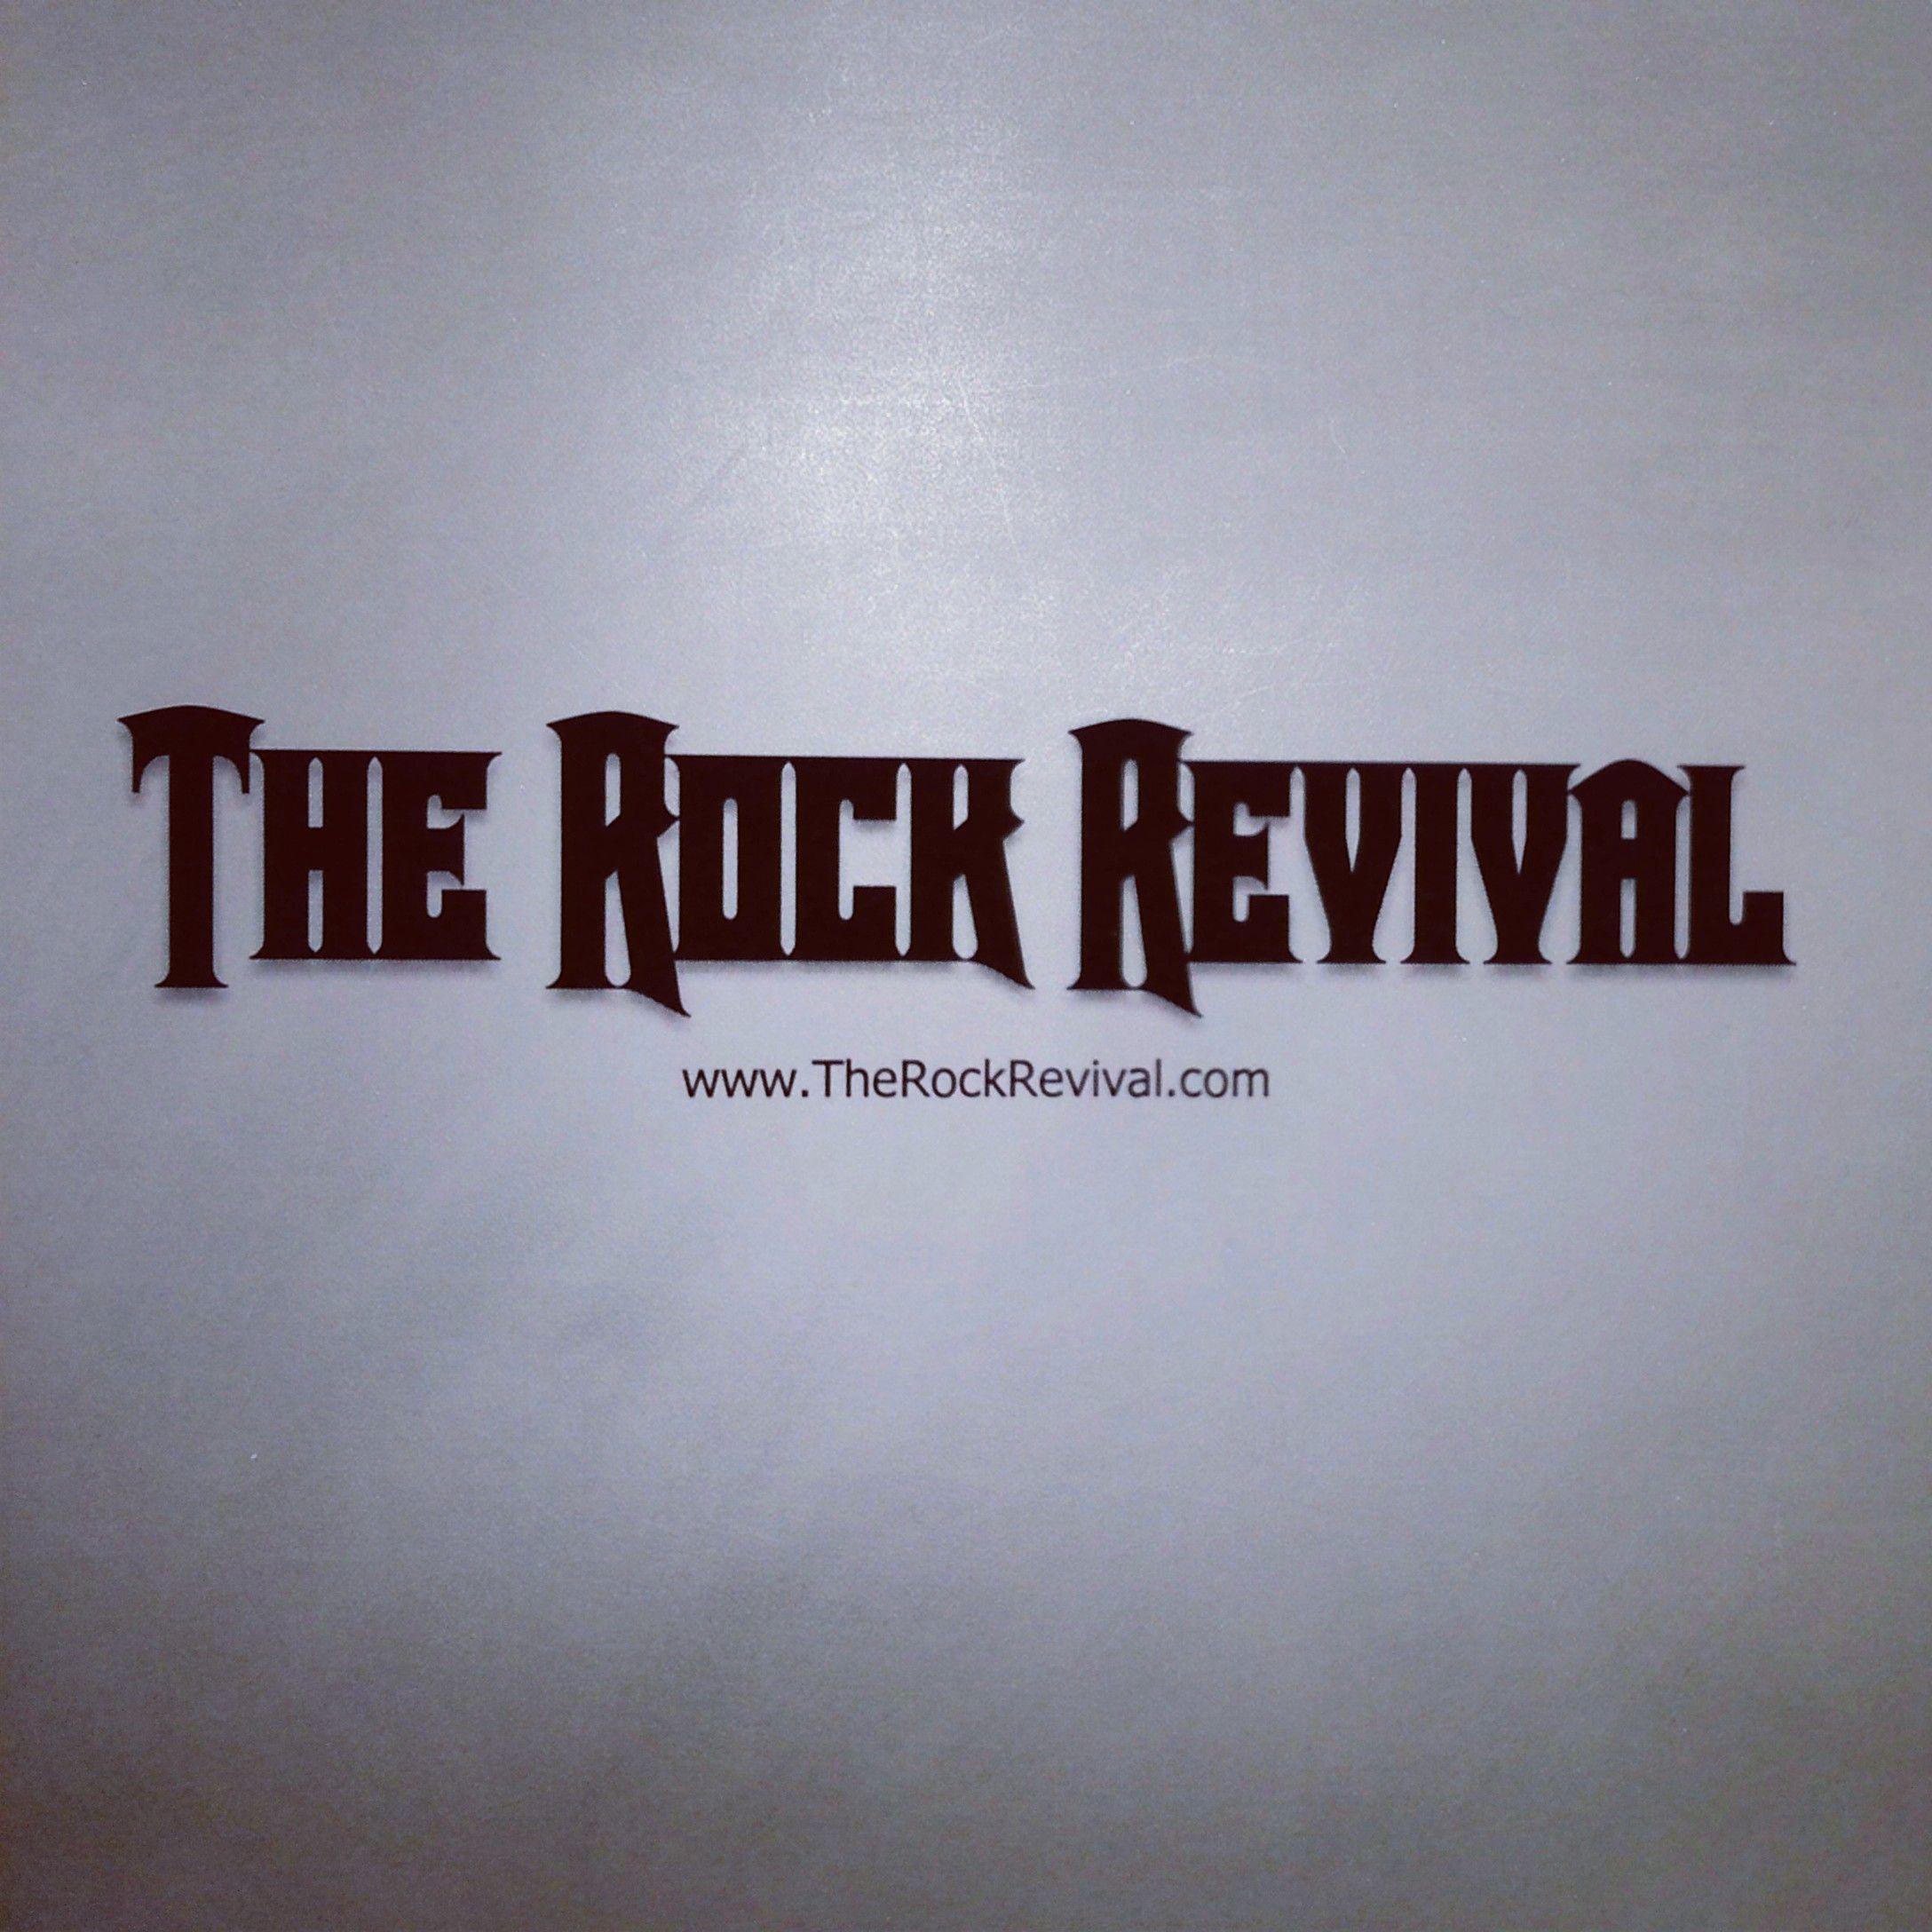 Rock Revival Logo - The Rock Revival Logo GOOD - The Rock Revival